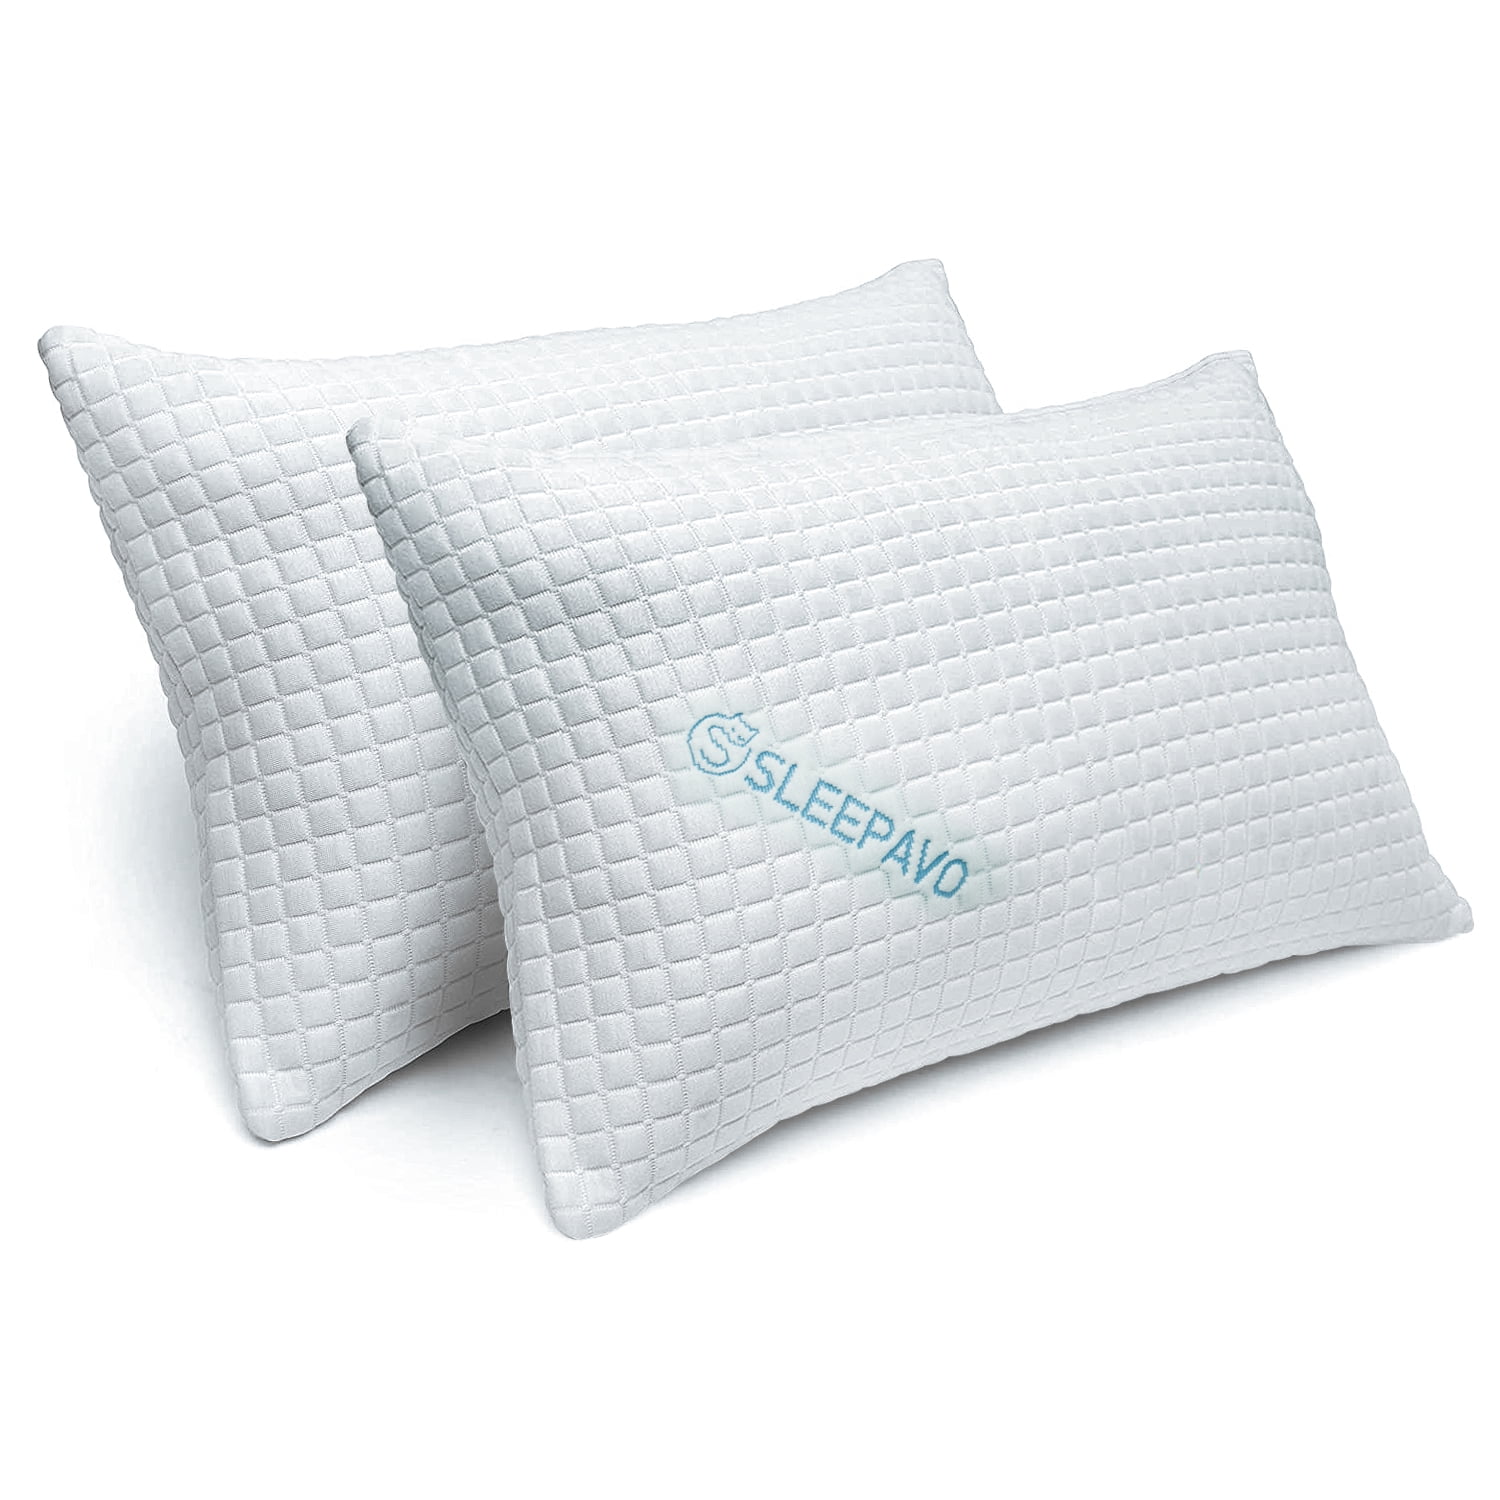 2x Queen Micro Gel Memory Foam Cream Bed Pillows Down alternative filled Cover 